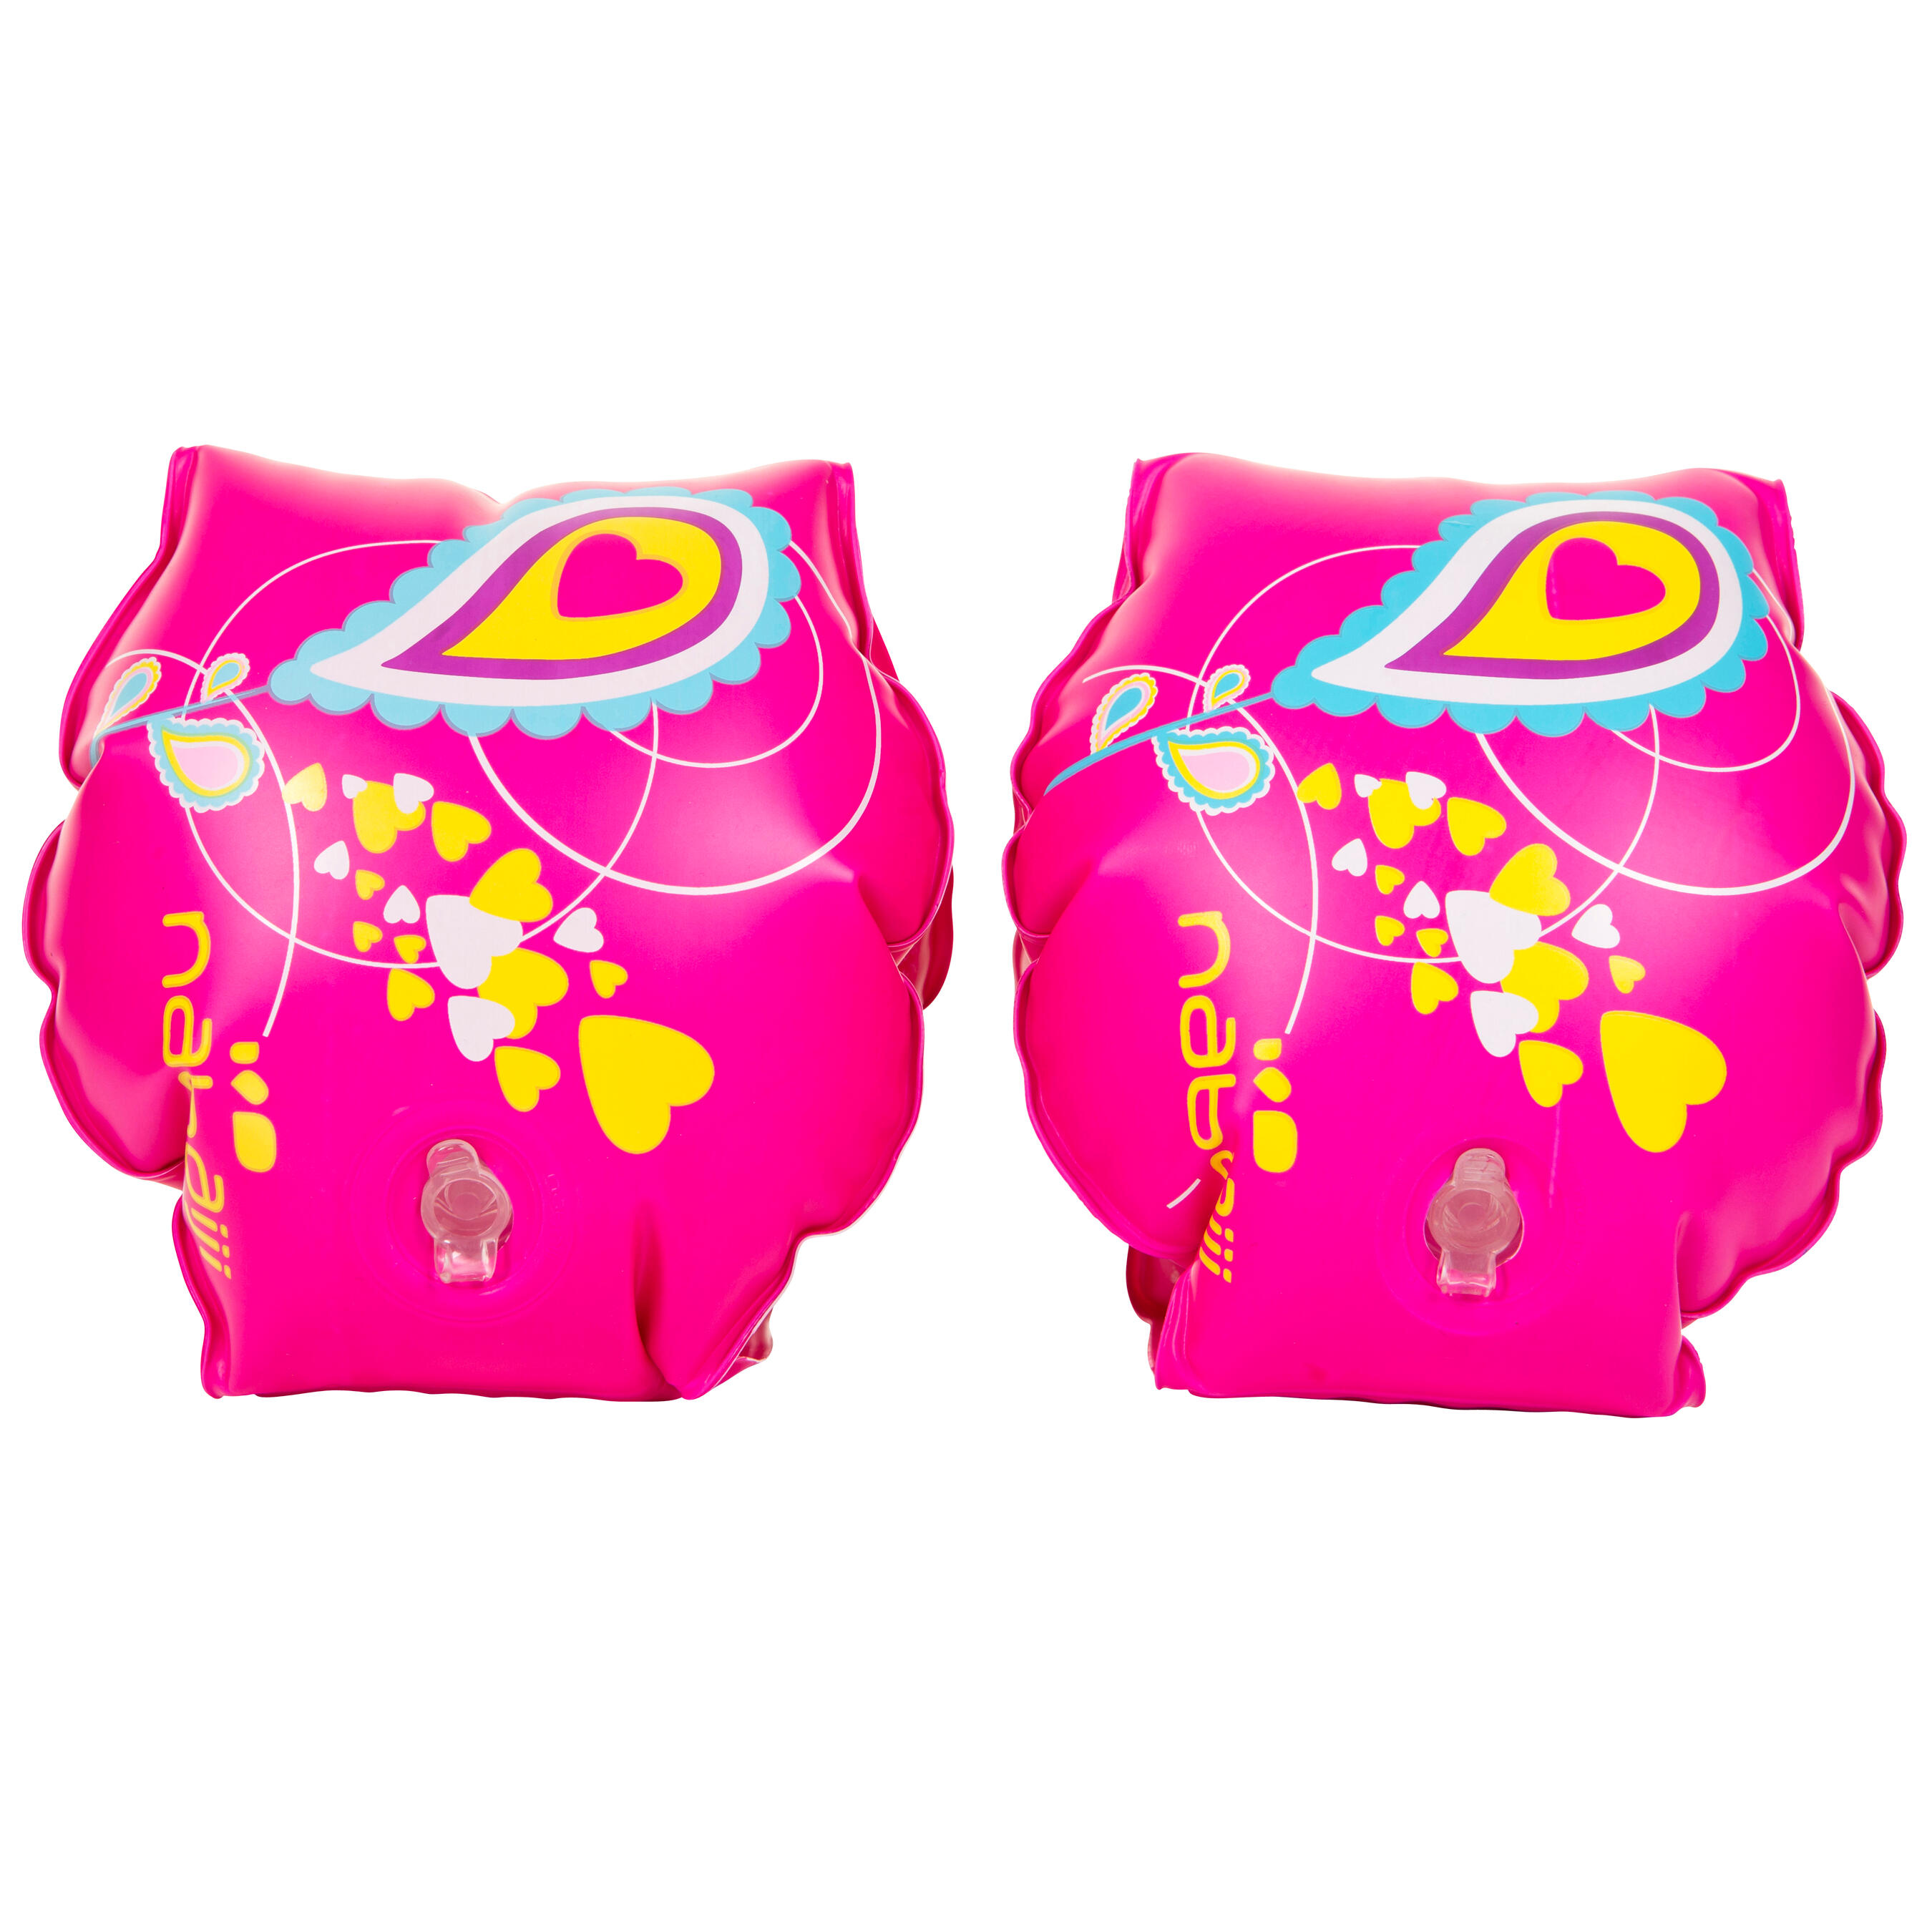 NABAIJI Armbands with "Kashmir" print and two inflation chambers - Pink 11-30 kg